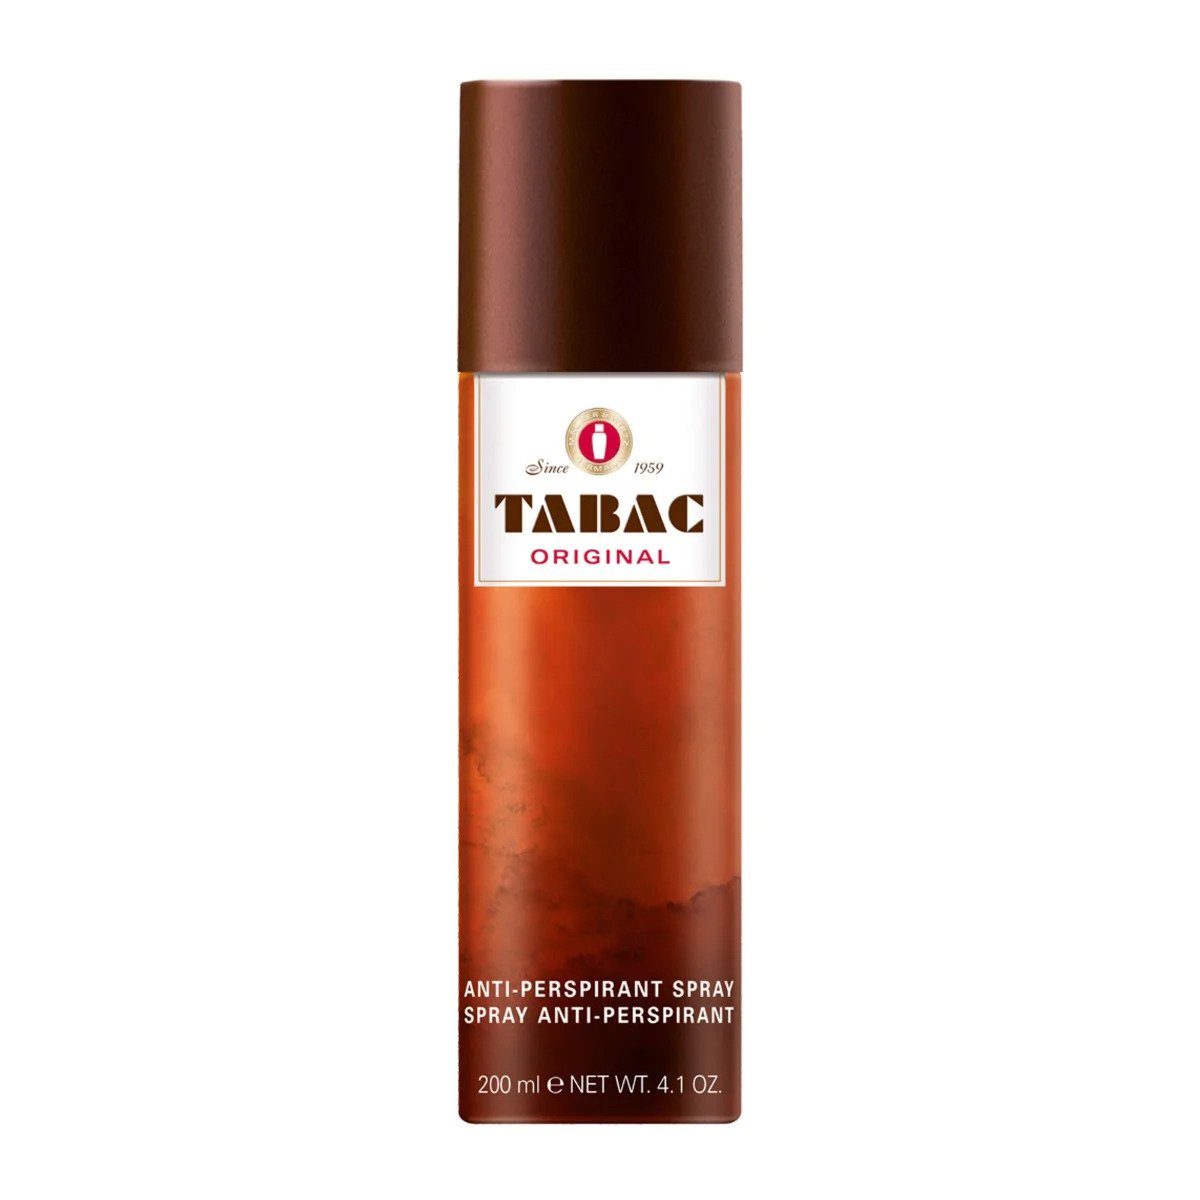 Maurer & Wirtz Tabac Original Antiperspirant Spray 200ml